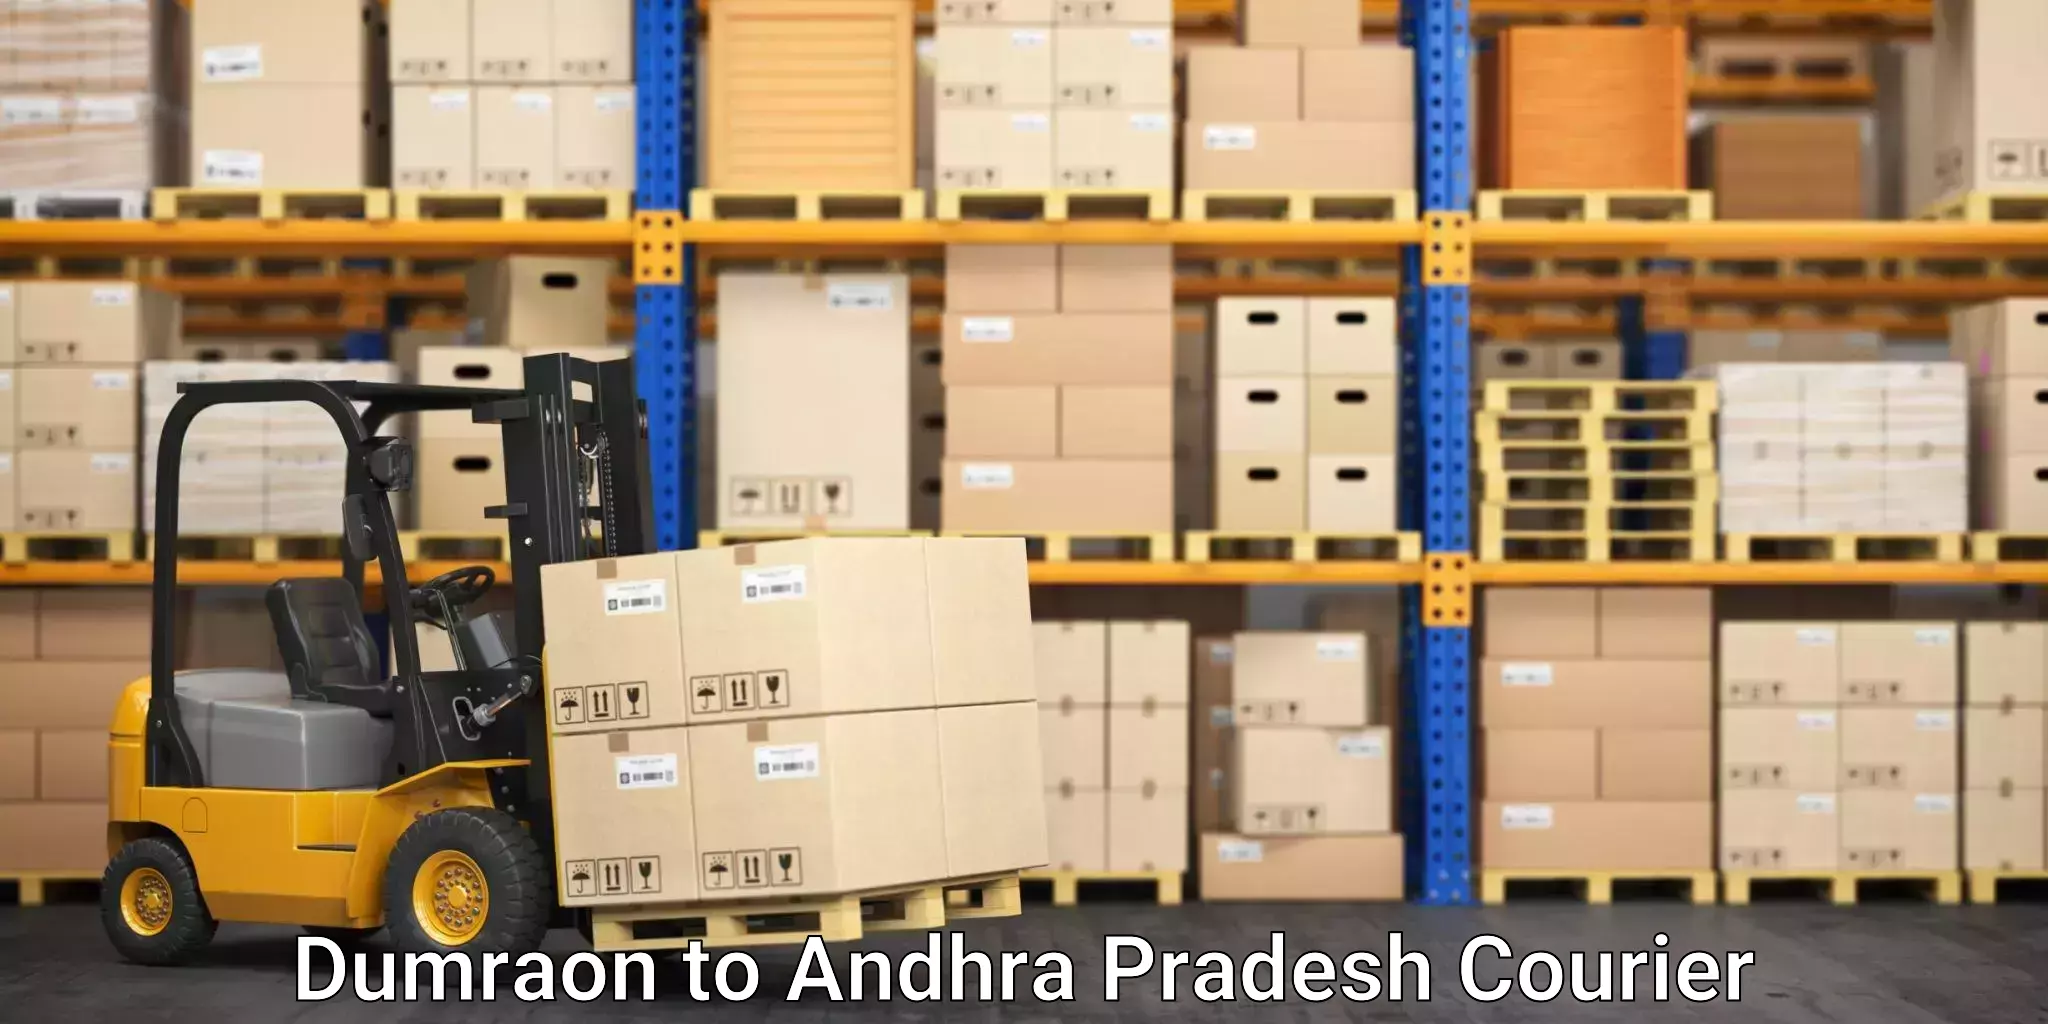 Furniture transport specialists Dumraon to Andhra Pradesh